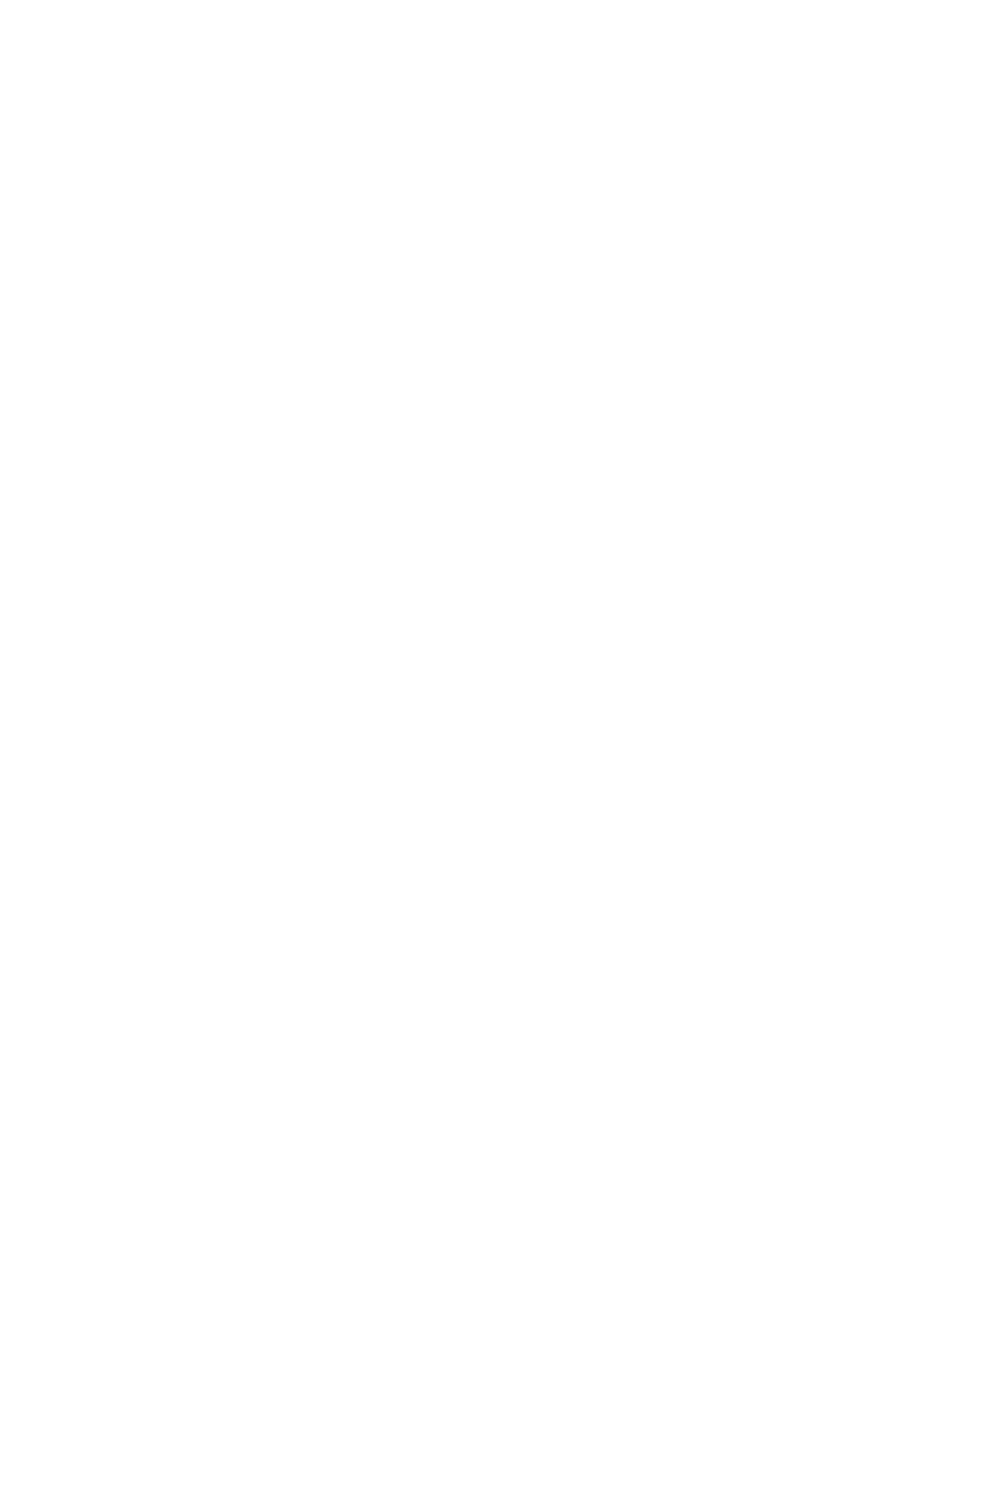 Danielle Levitt mens fashion photography celebrity portrait of MOONLIGHT actor Ashton Sanders wearing posing against bright orange studio backdrop wearing white tank top for Boys By Girls Magazine editorial 